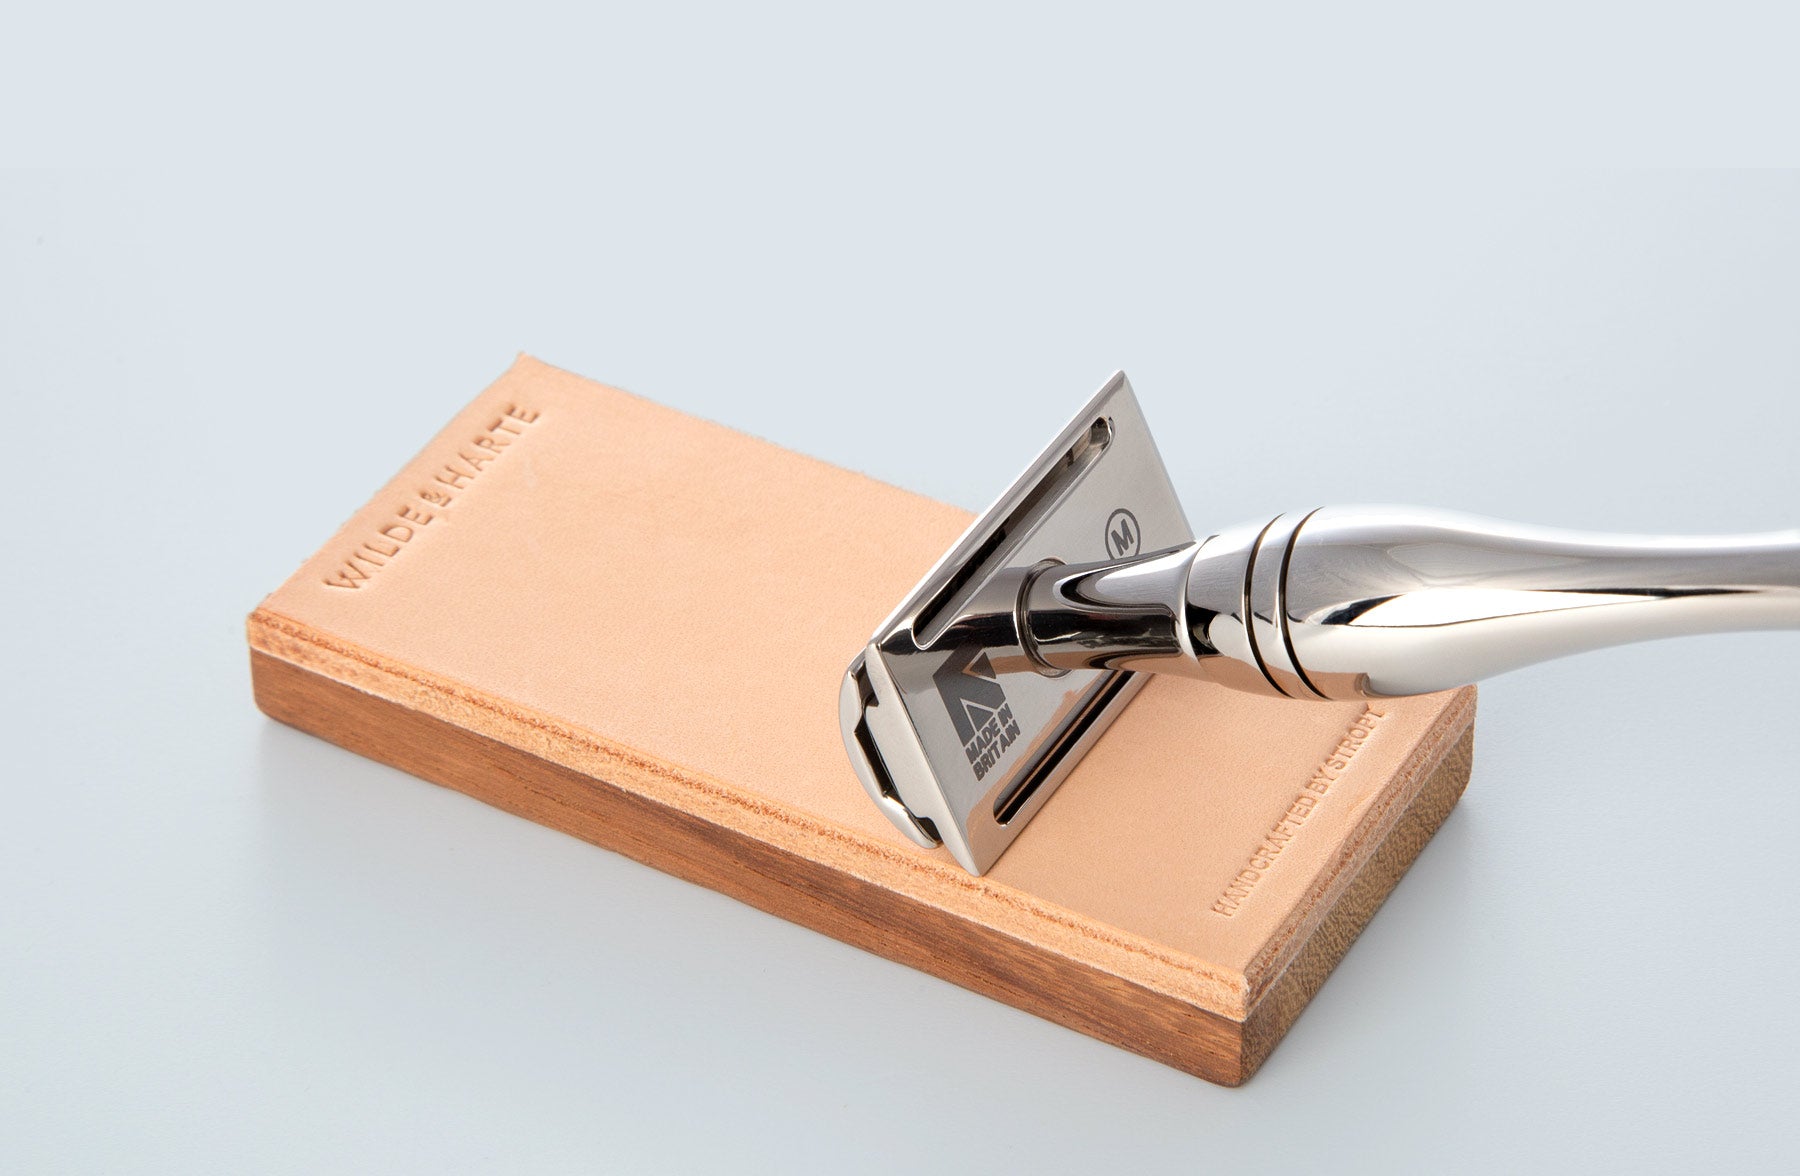 How to sharpen a safety razor blade